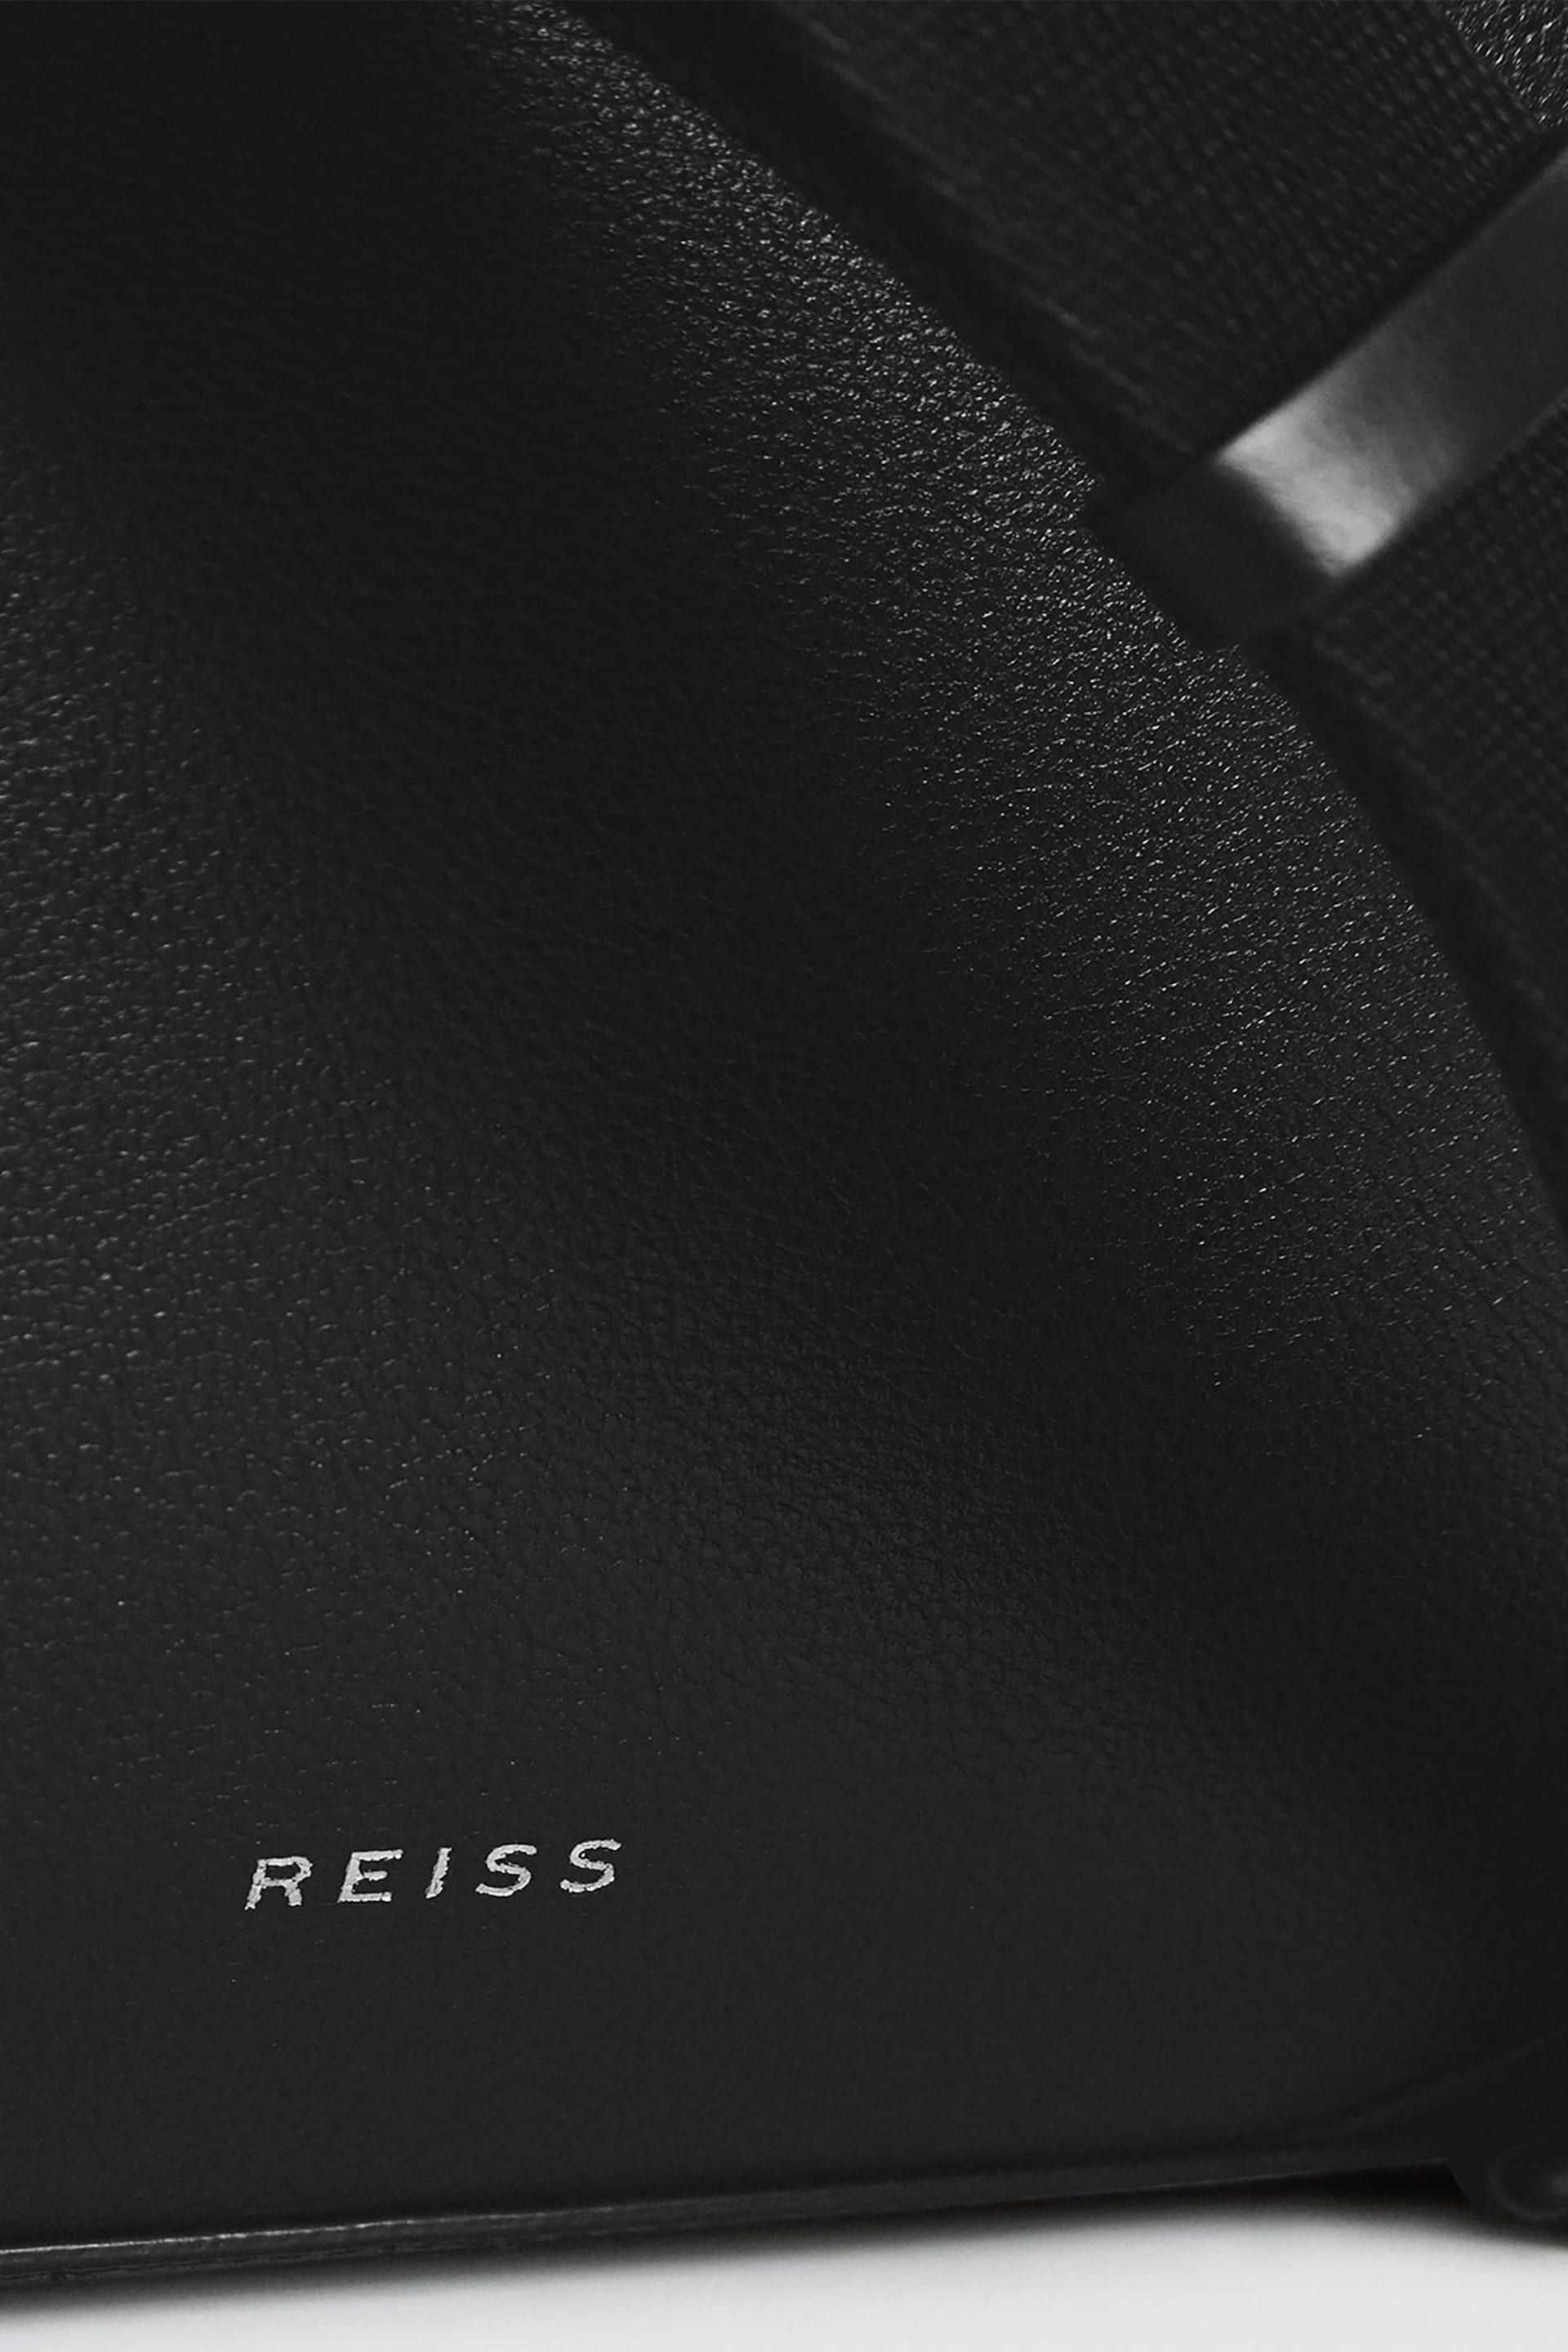 Reiss Black Elliott Leather Briefcase - Image 4 of 5